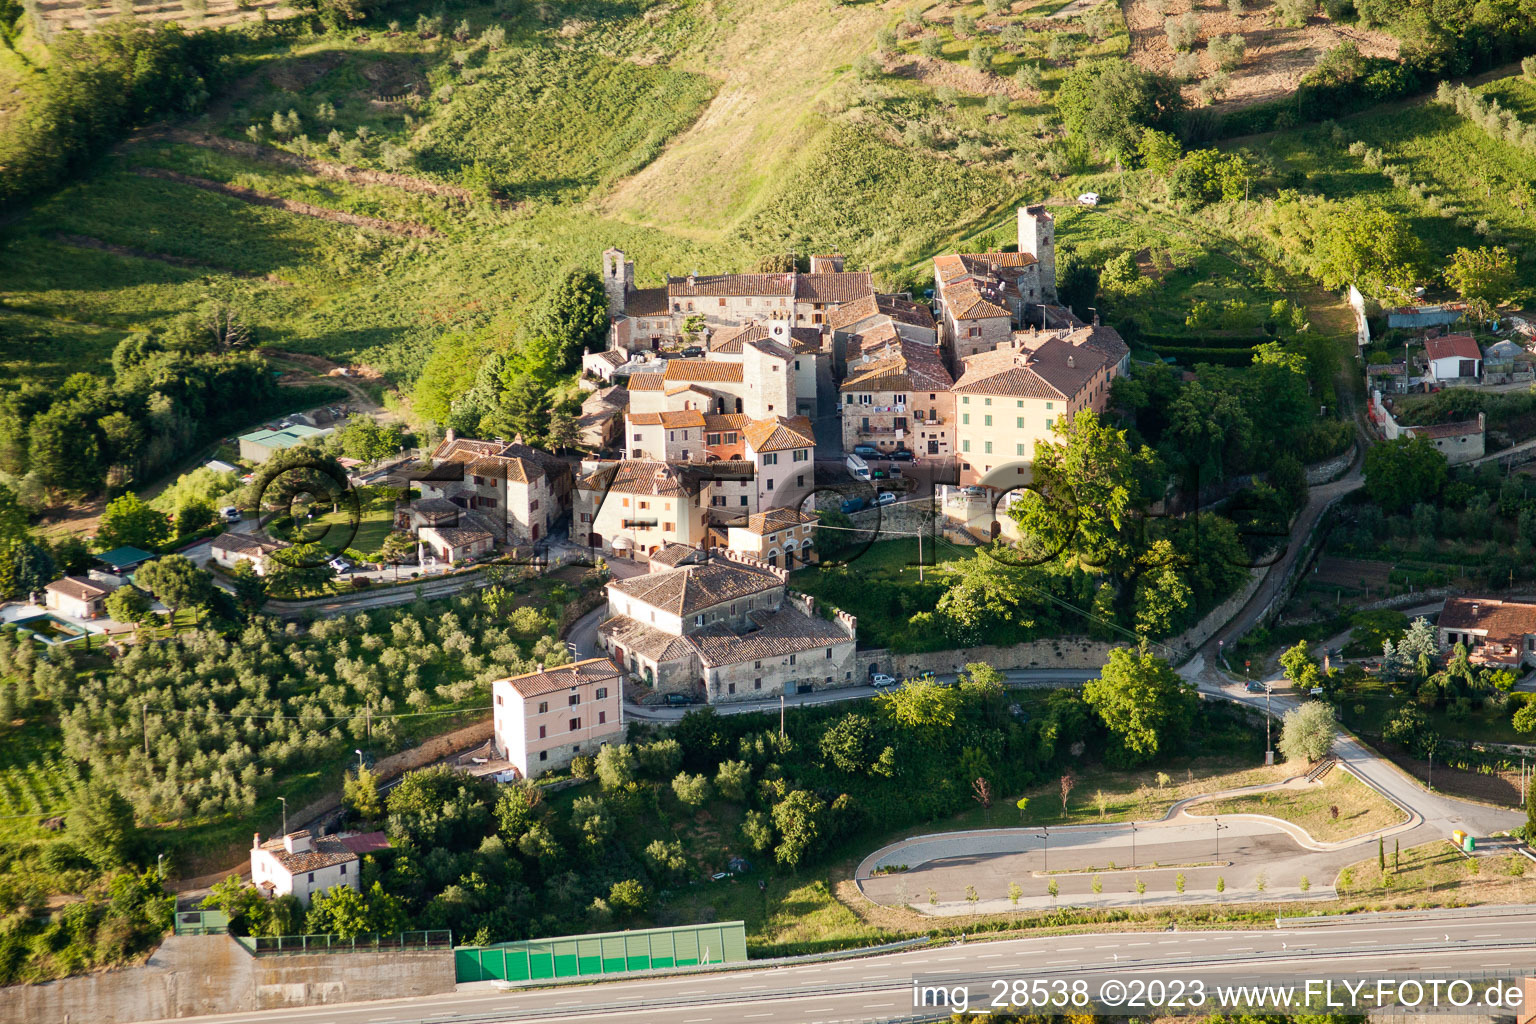 Luftbild von Rapolano Terme im Bundesland Toscana, Italien